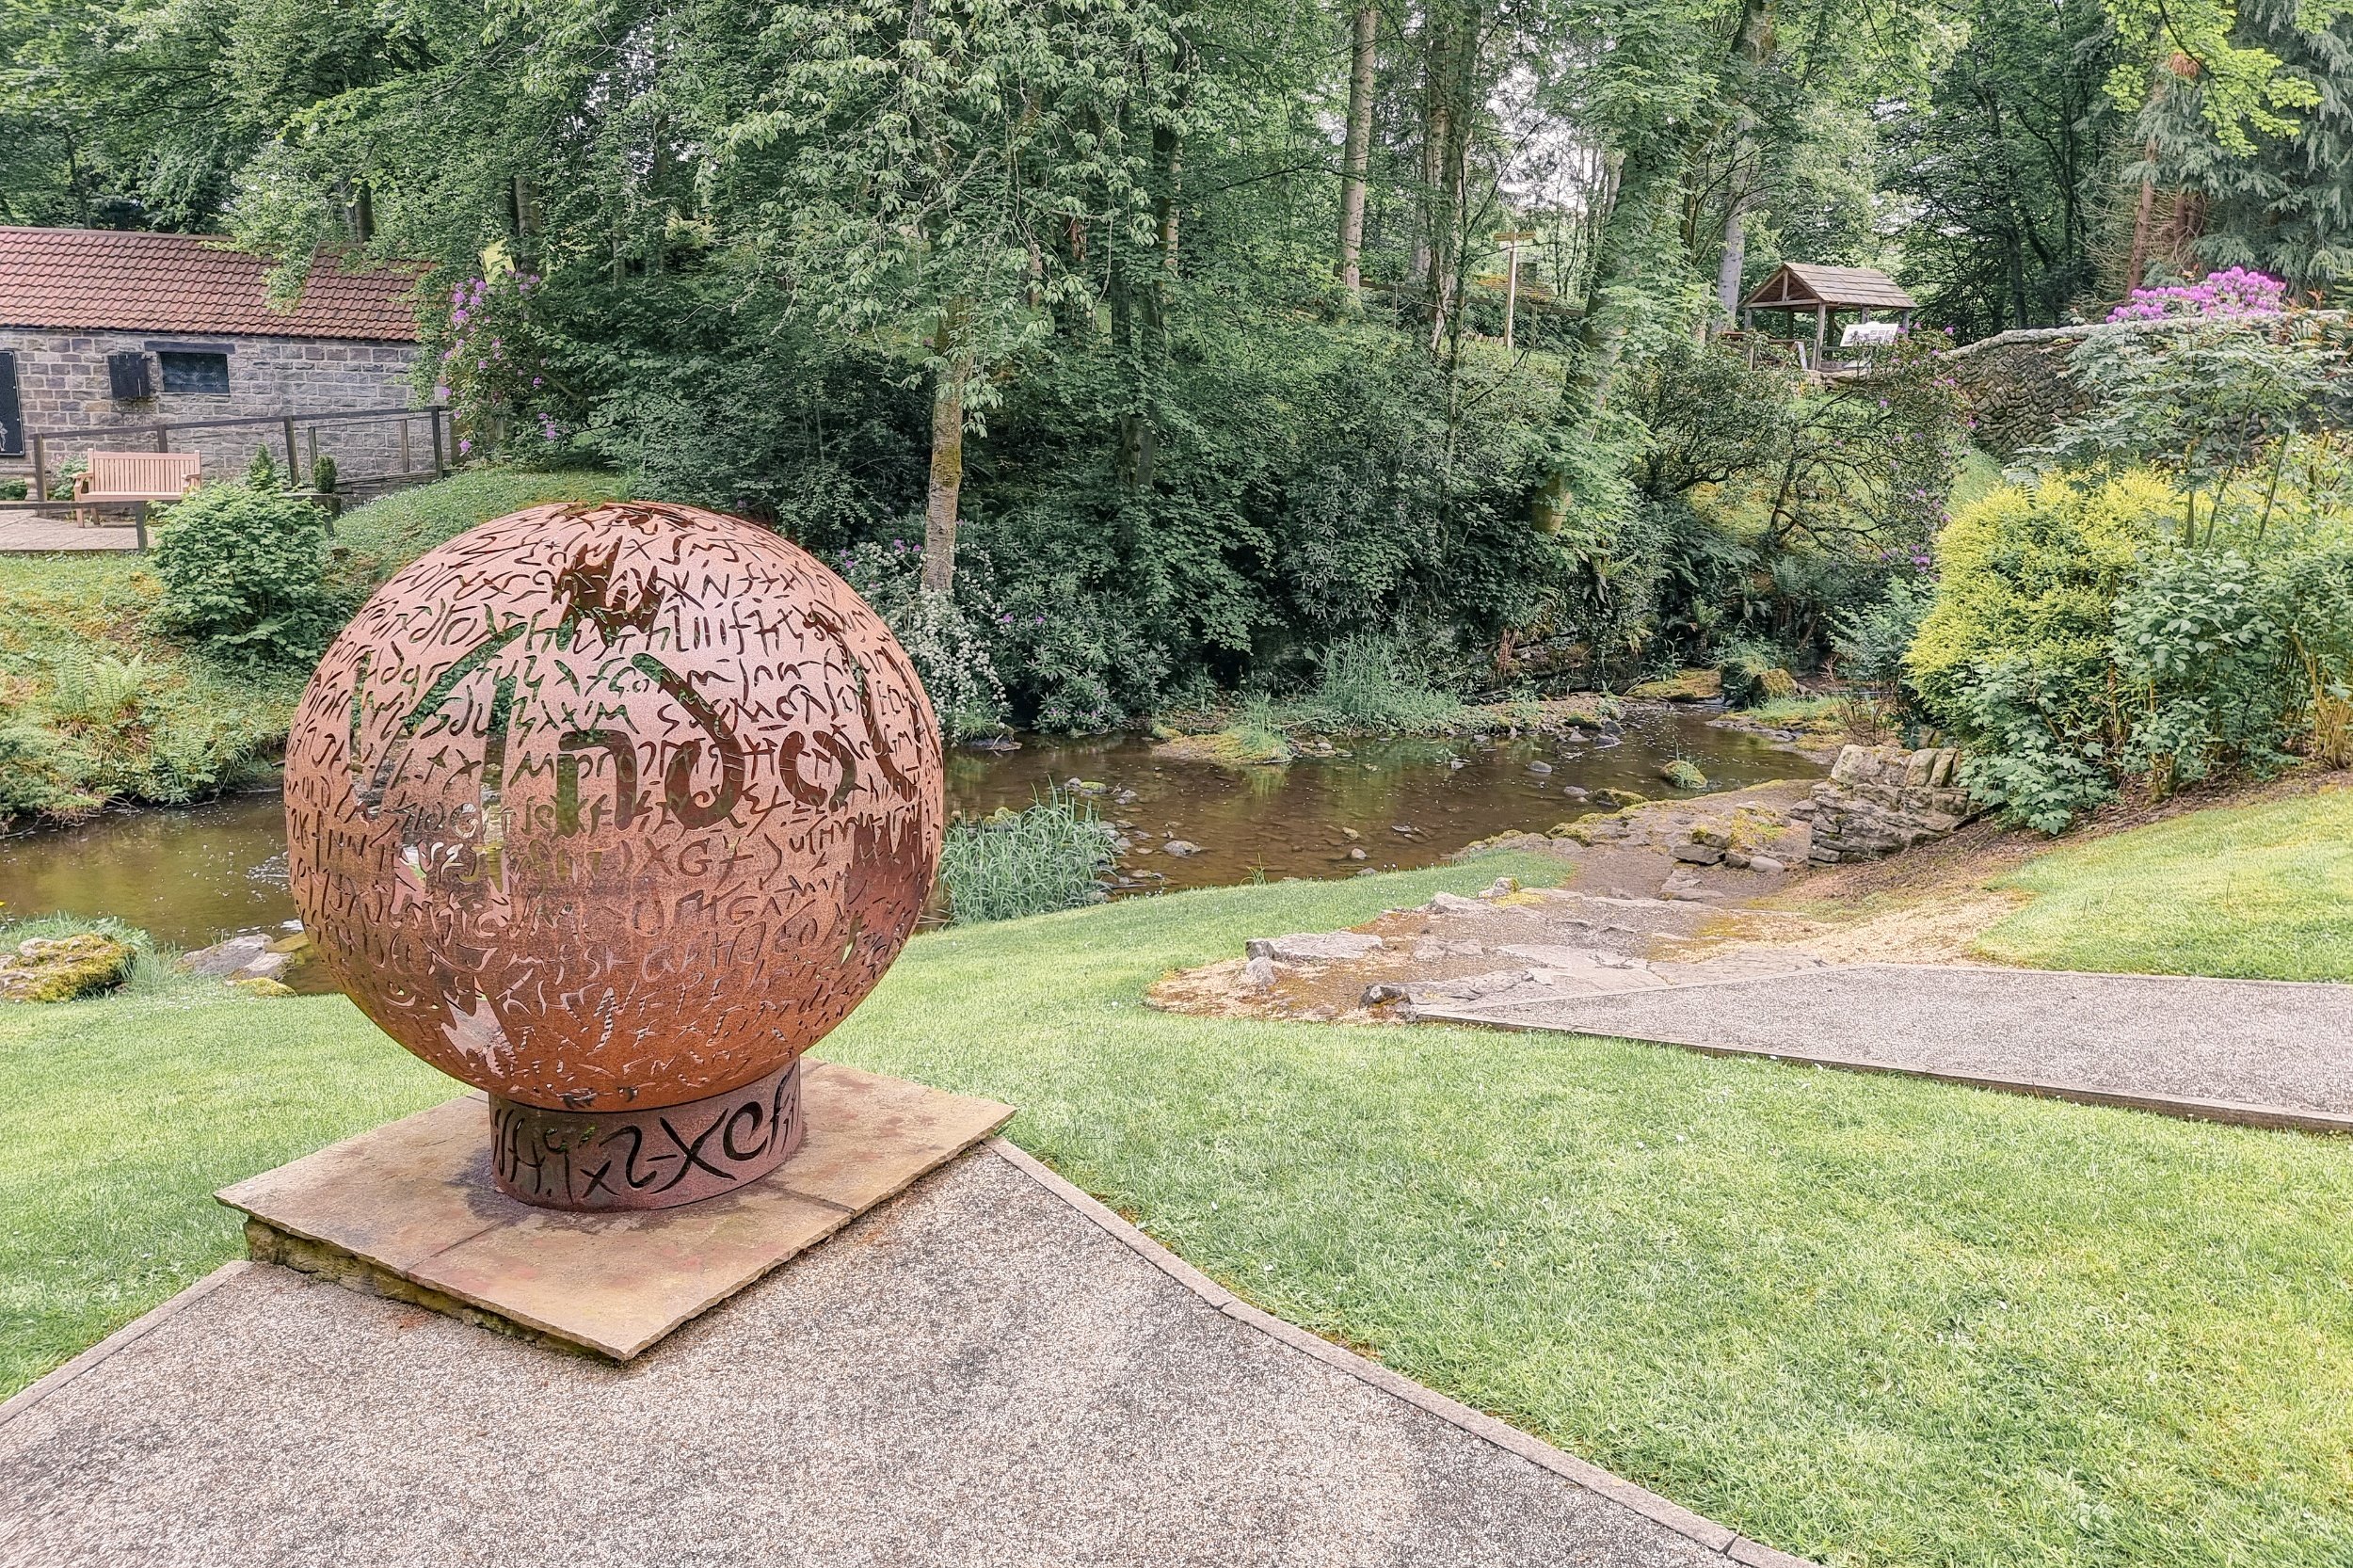 The Vindolanda sphere